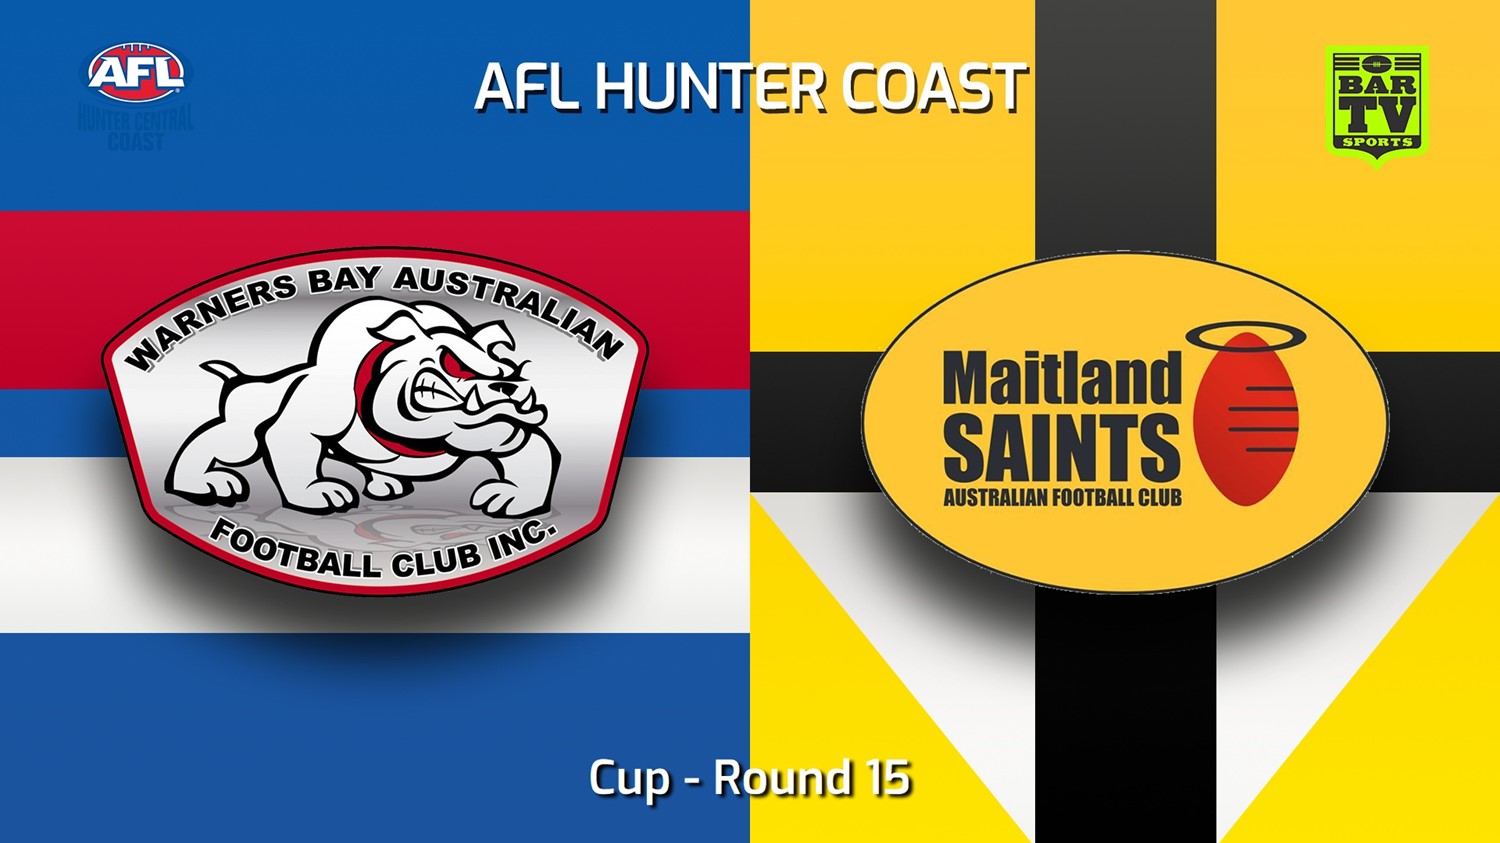 230729-AFL Hunter Central Coast Round 15 - Cup - Warners Bay Bulldogs v Maitland Saints Minigame Slate Image